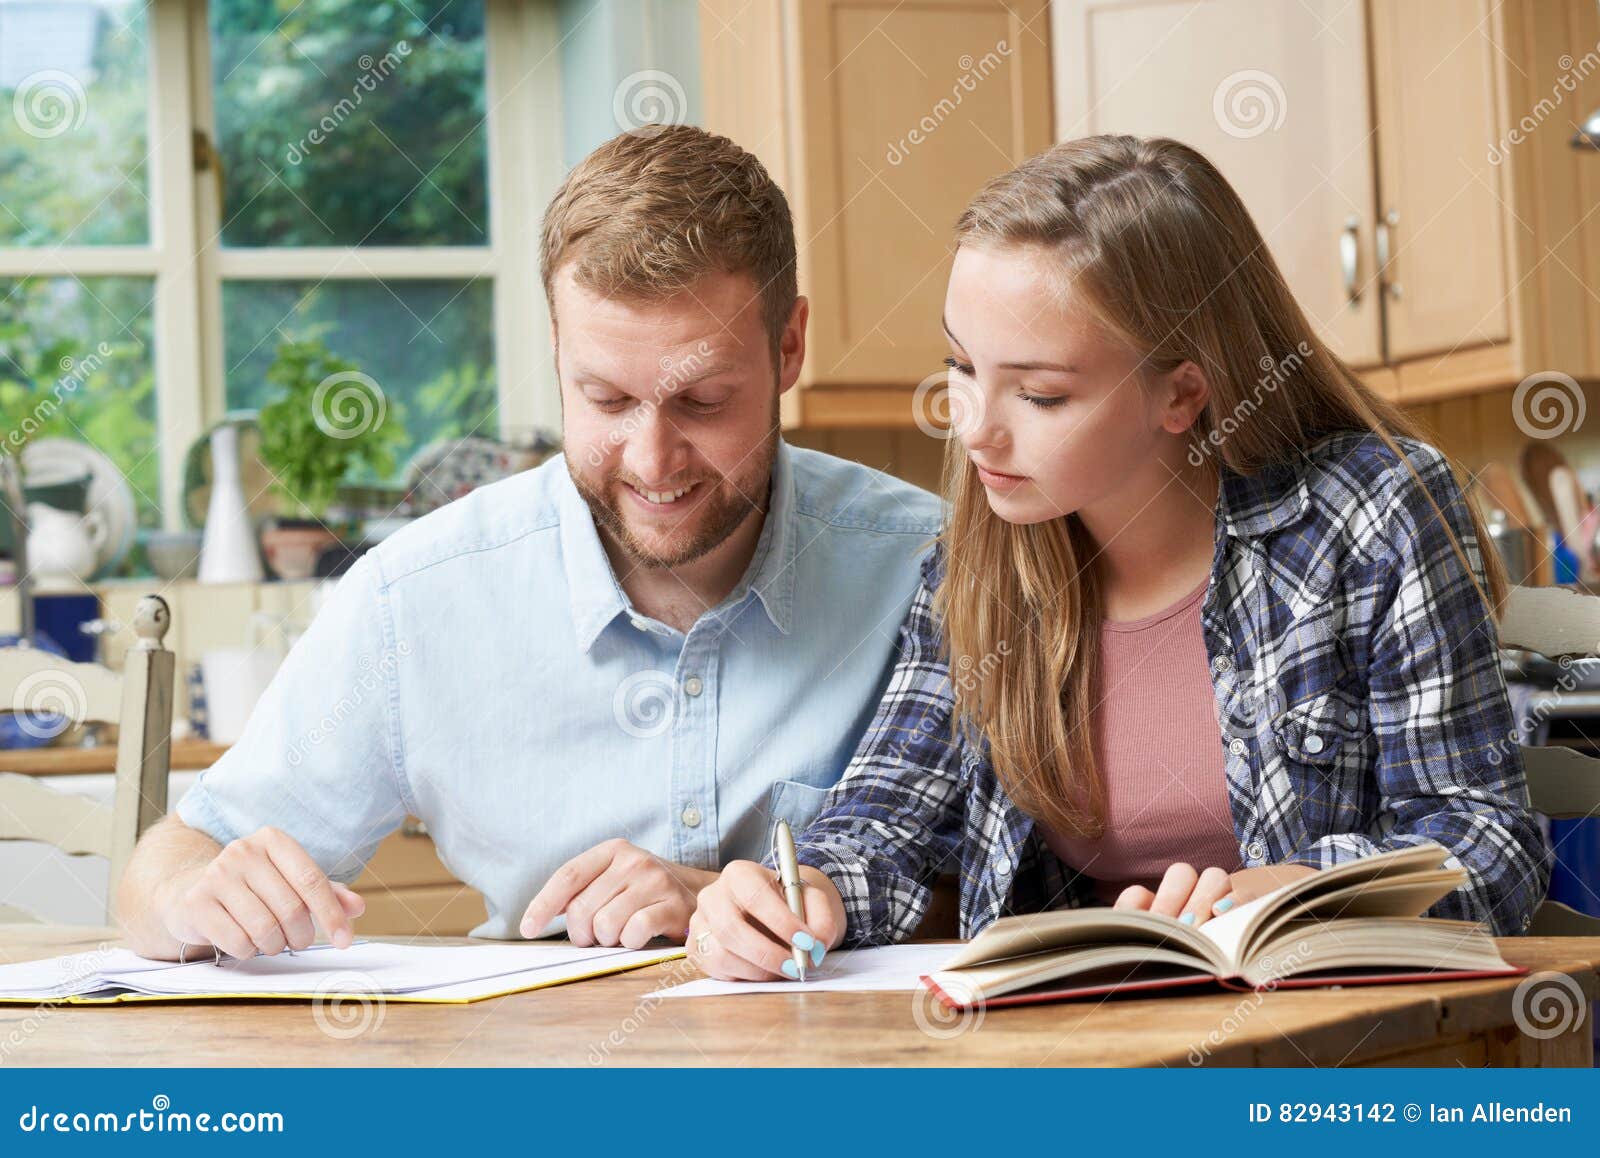 male home tutor helping teenage girl with studies